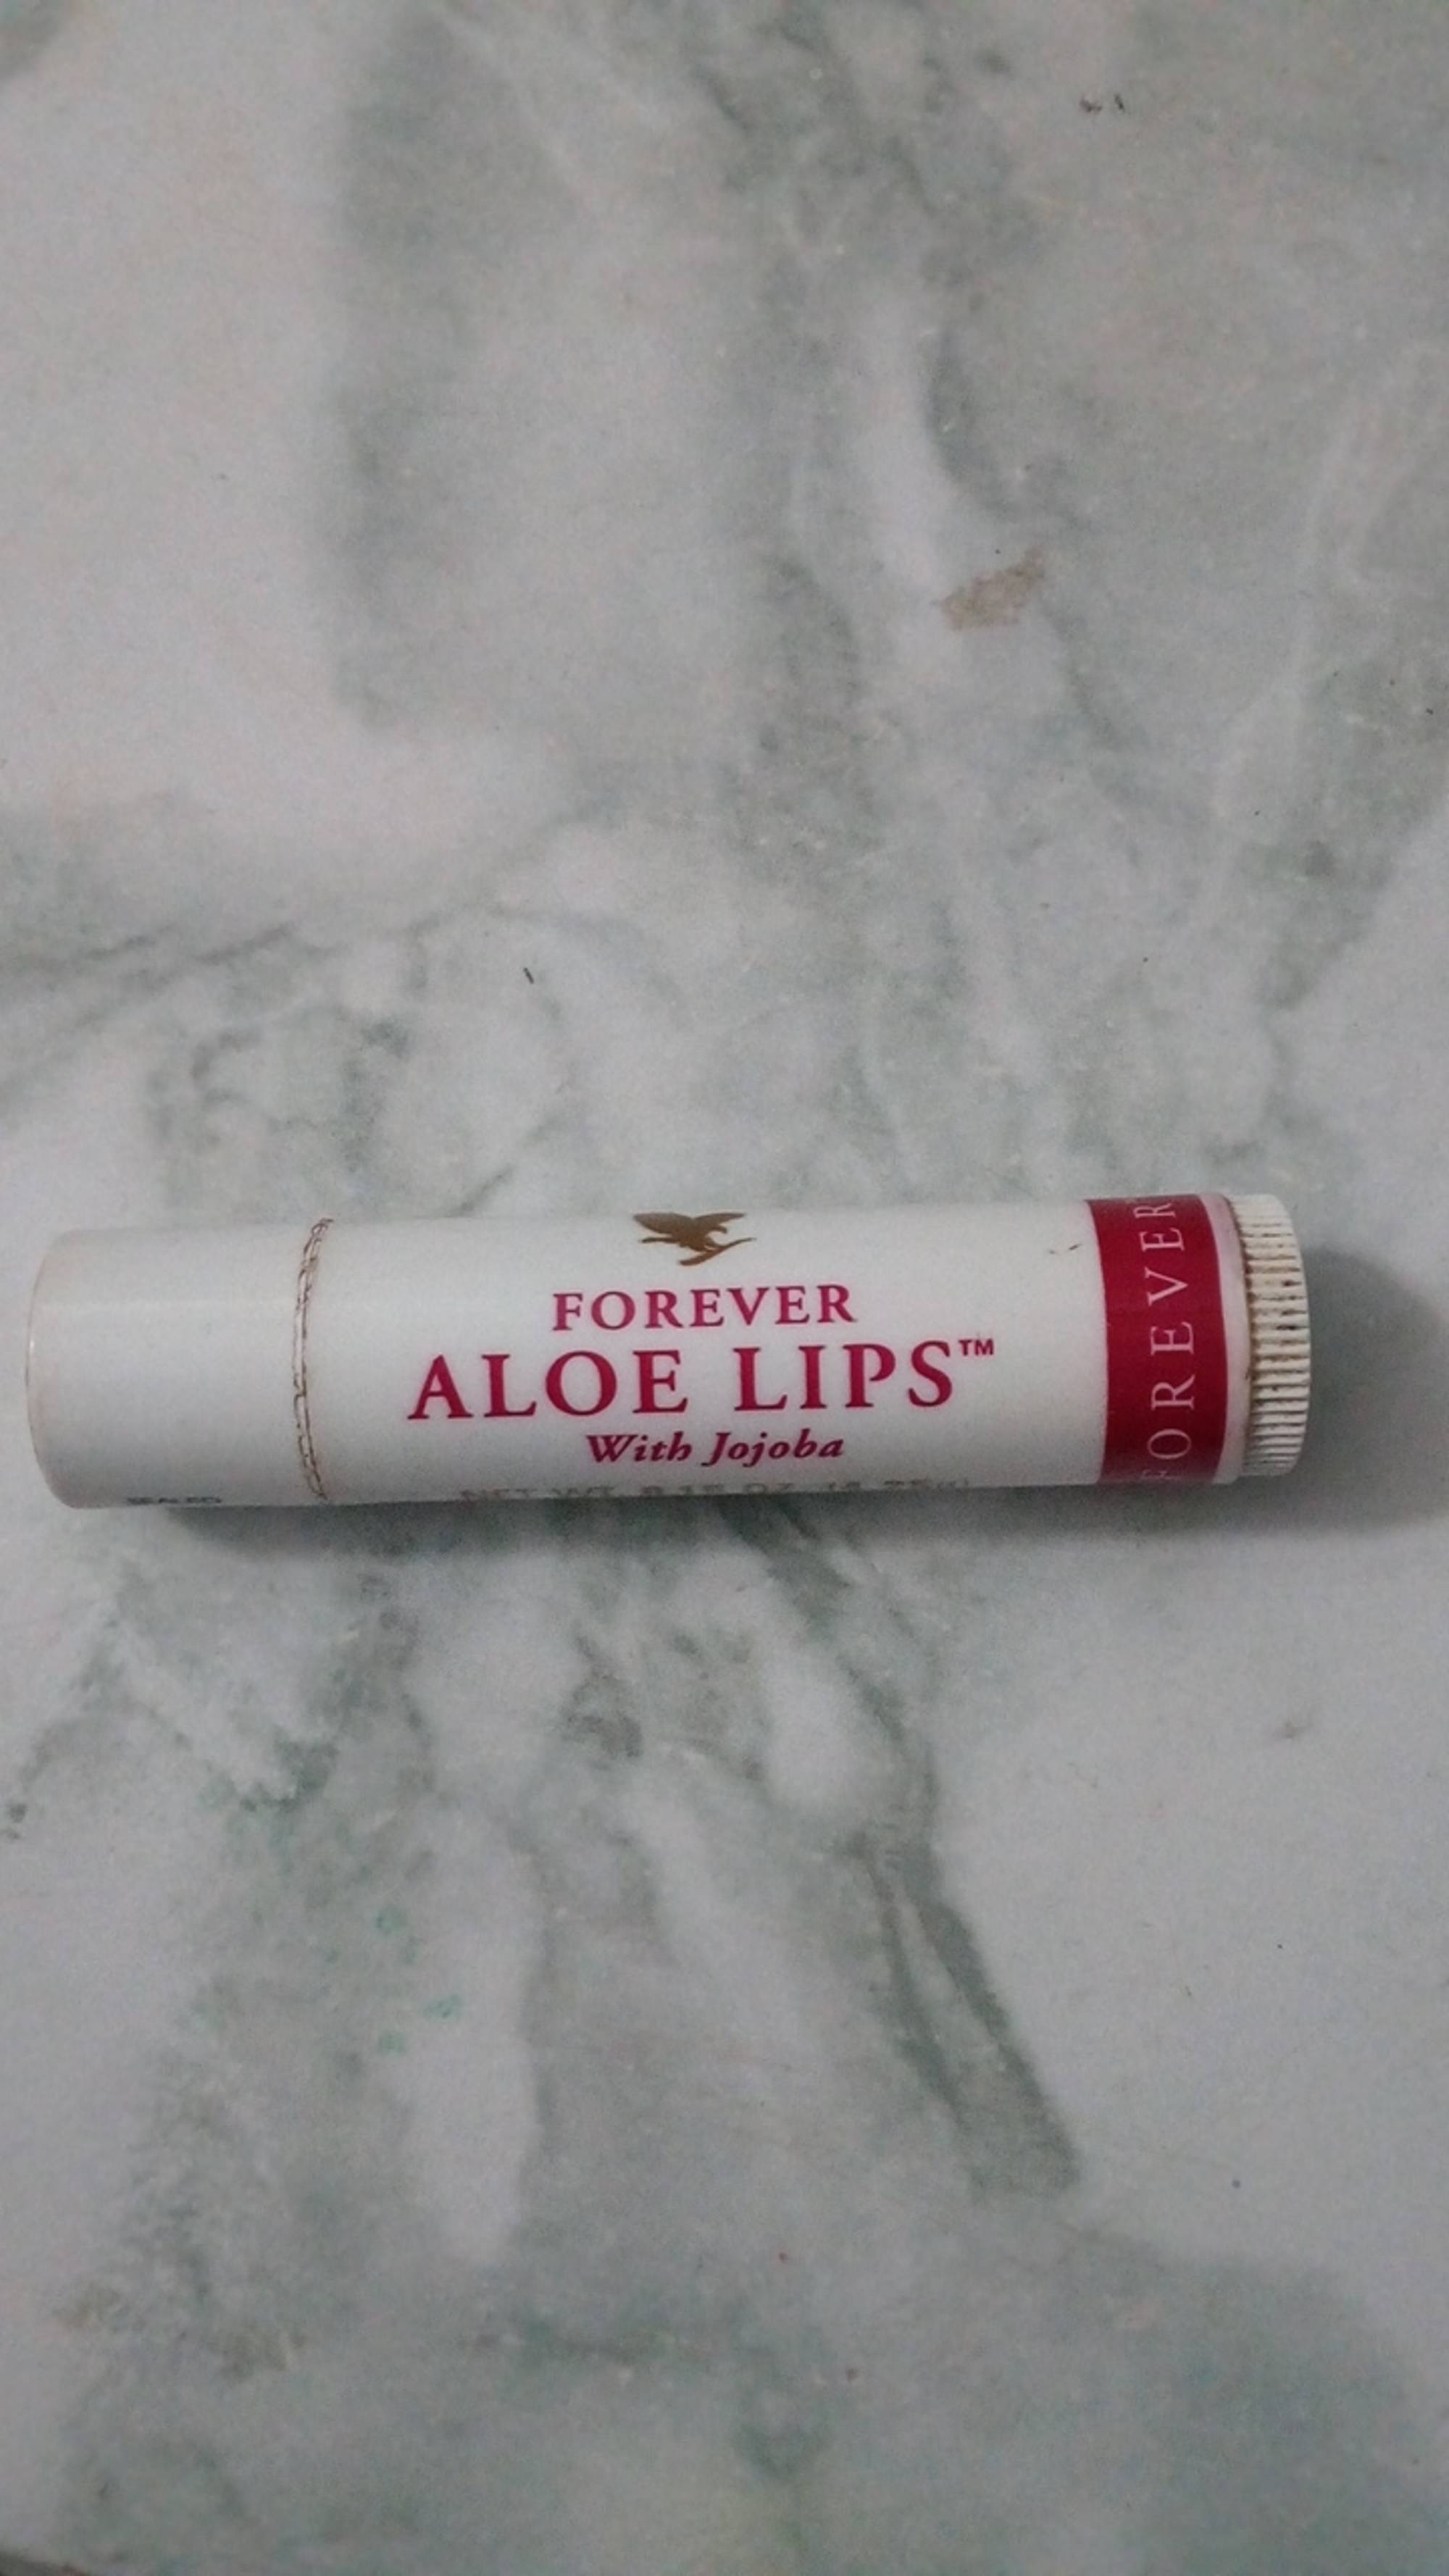 FOREVER - Aloe lips with jojoba